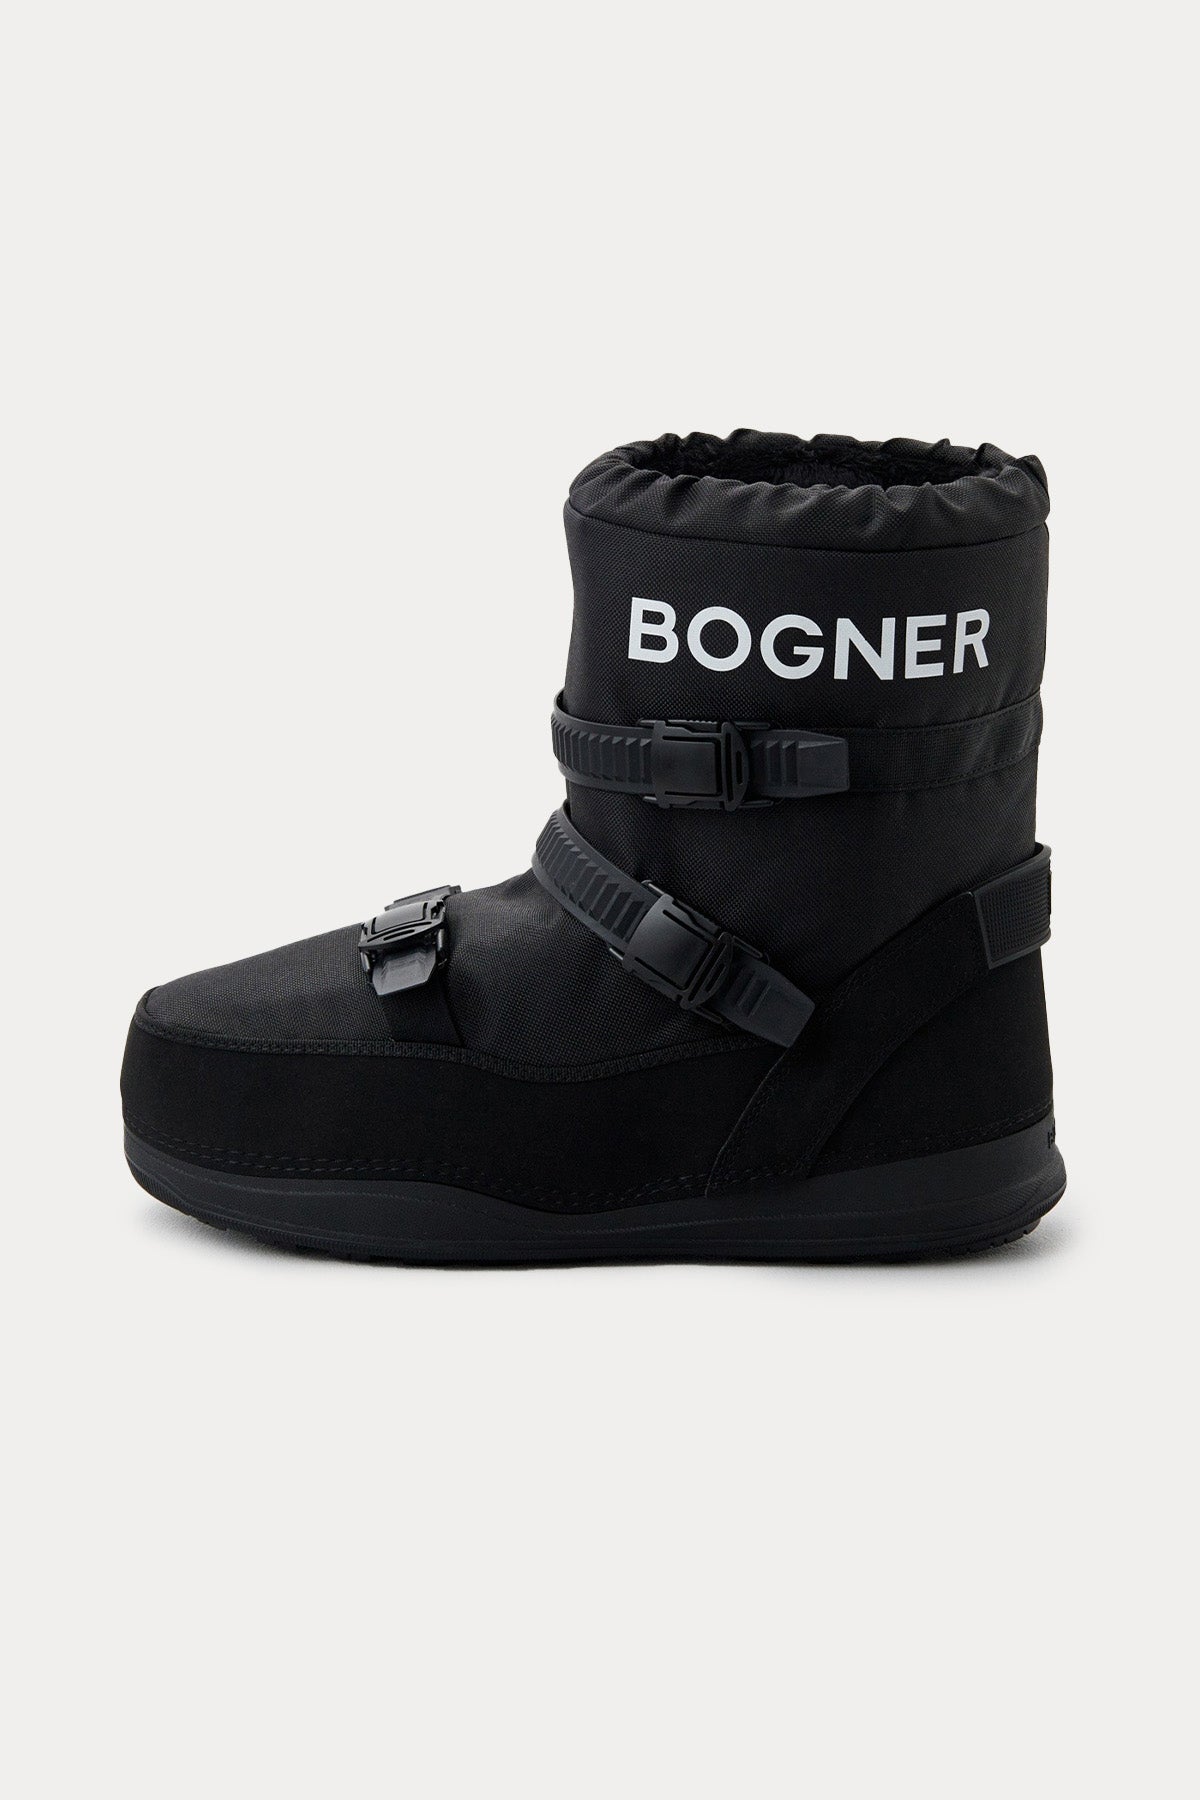 Bogner Laax İçi Kürklü Kar Botu-Libas Trendy Fashion Store